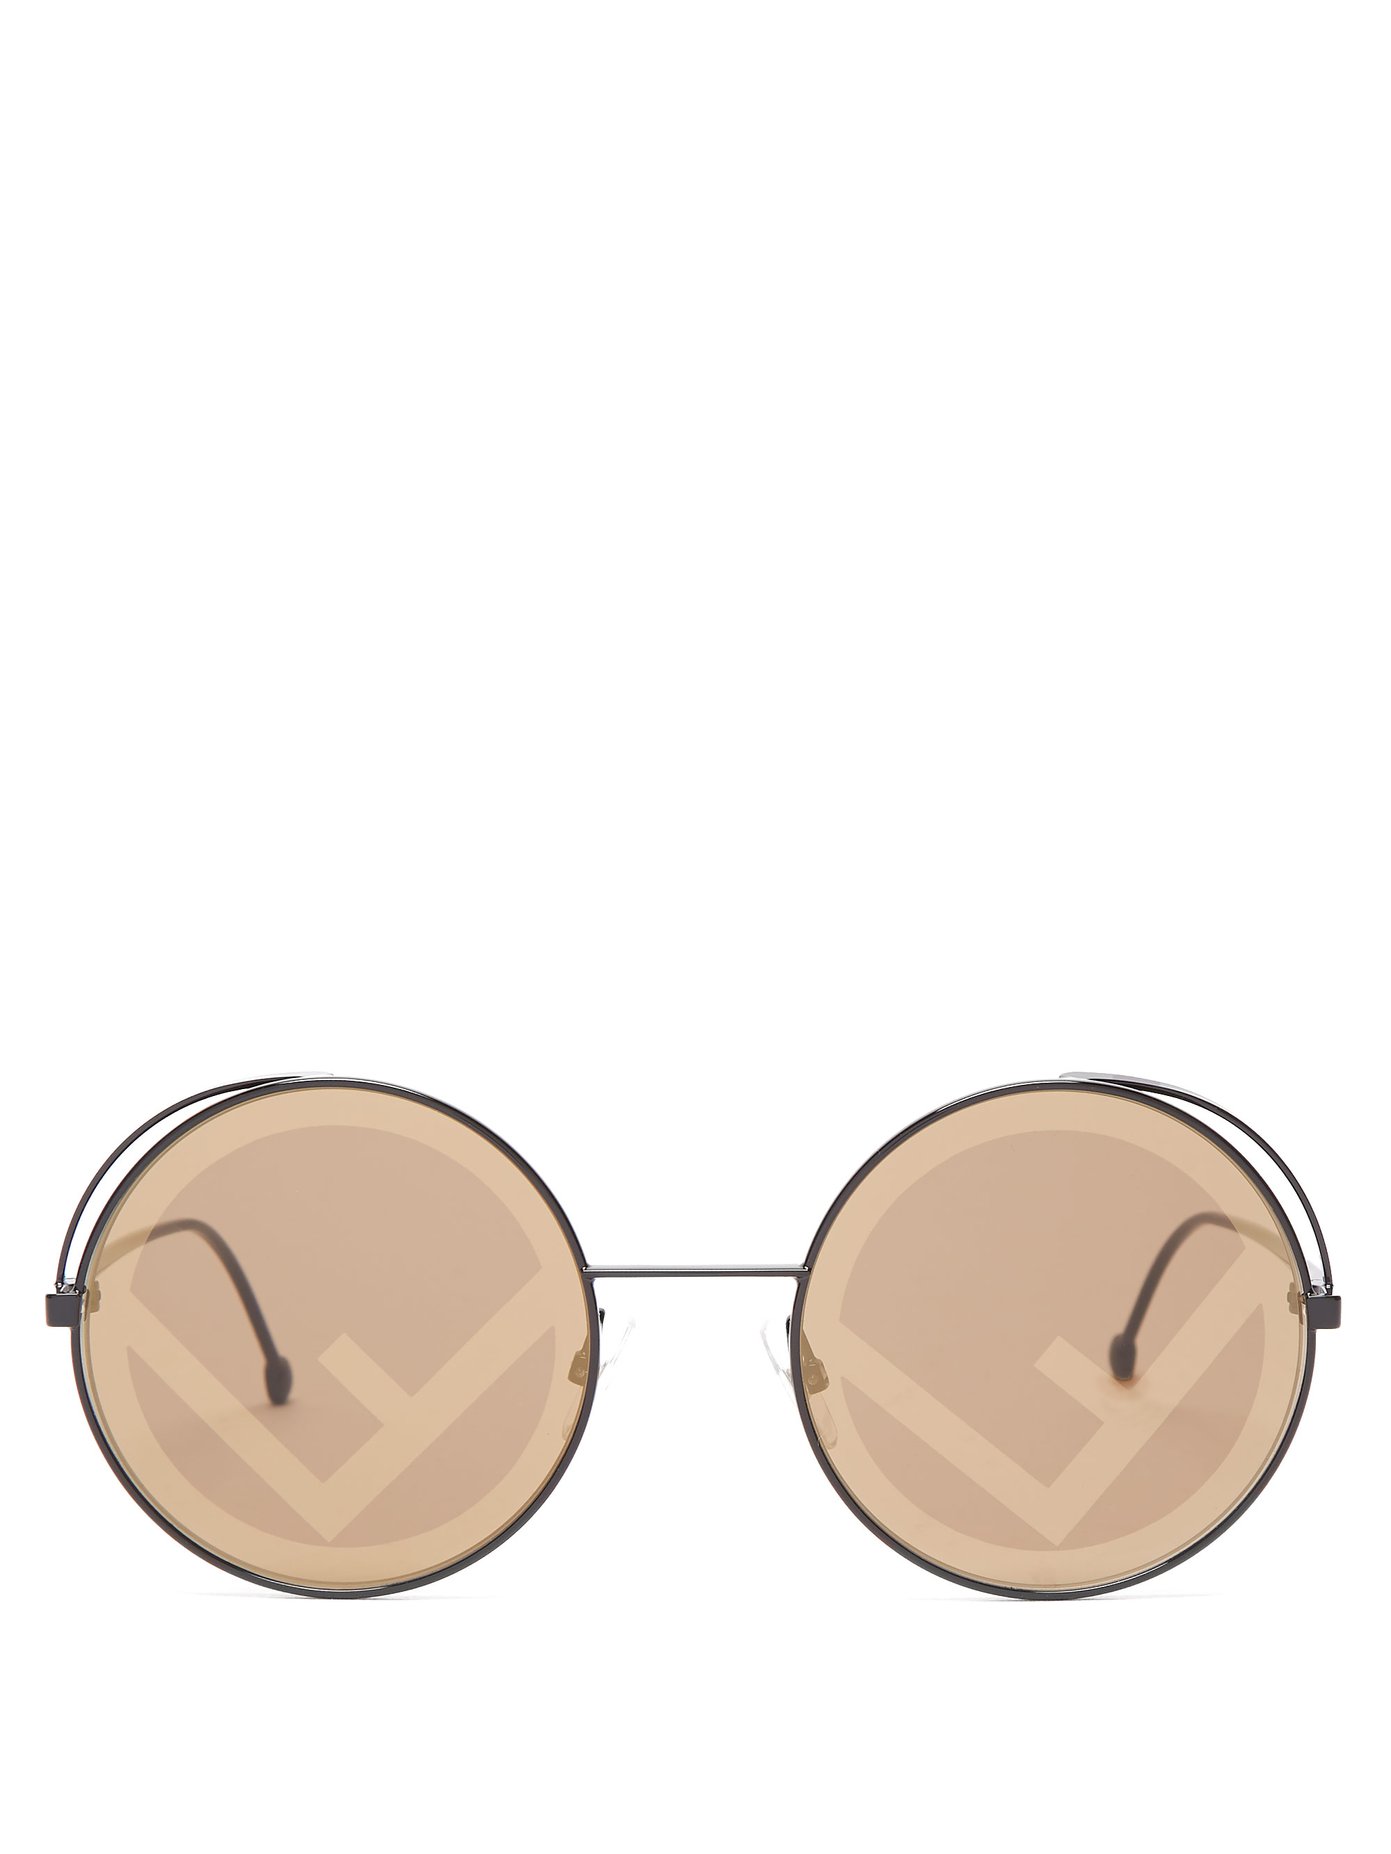 fendi circle glasses